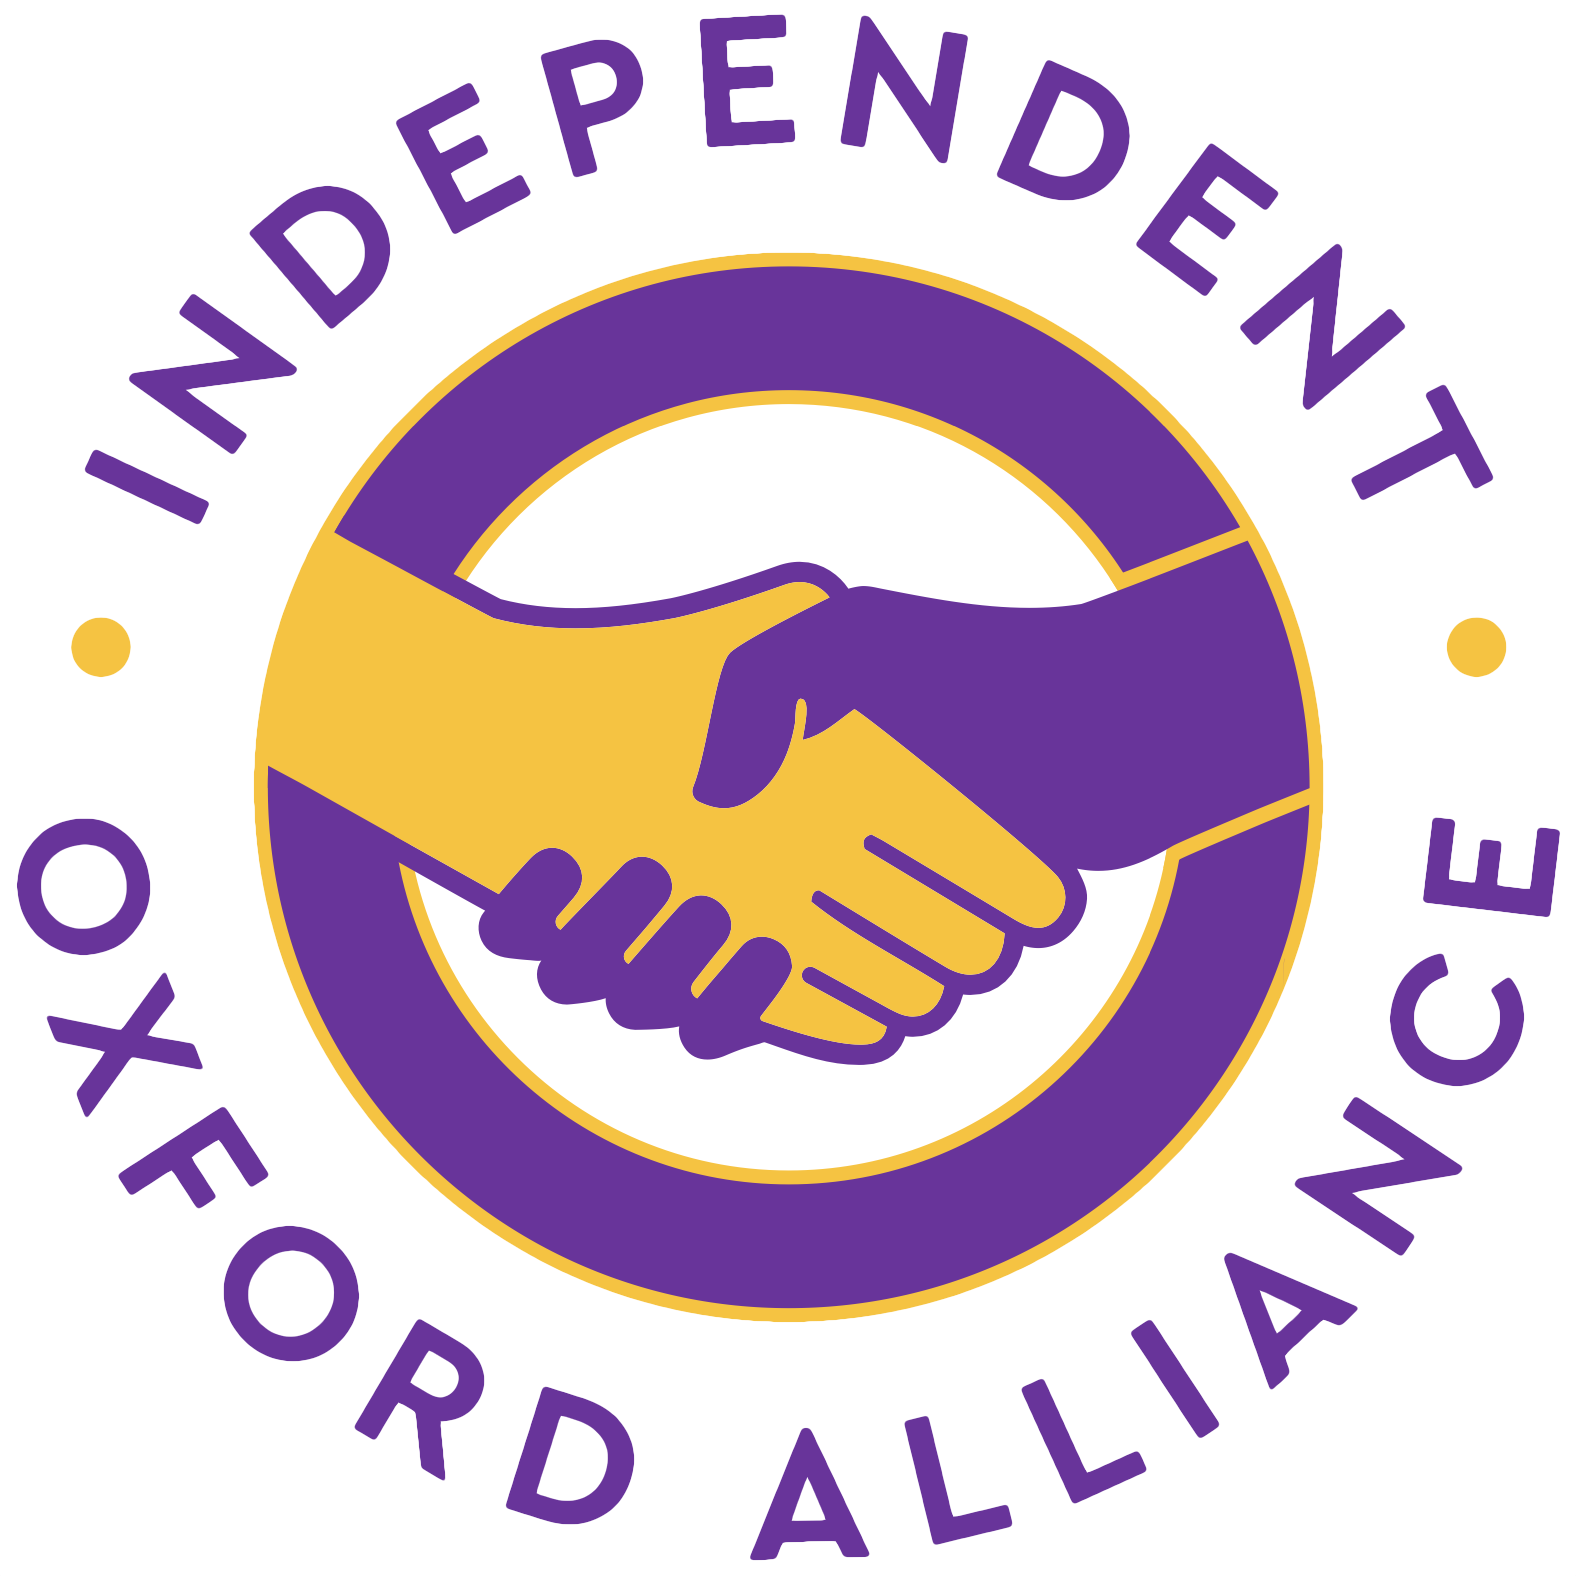 Independent Oxford Alliance